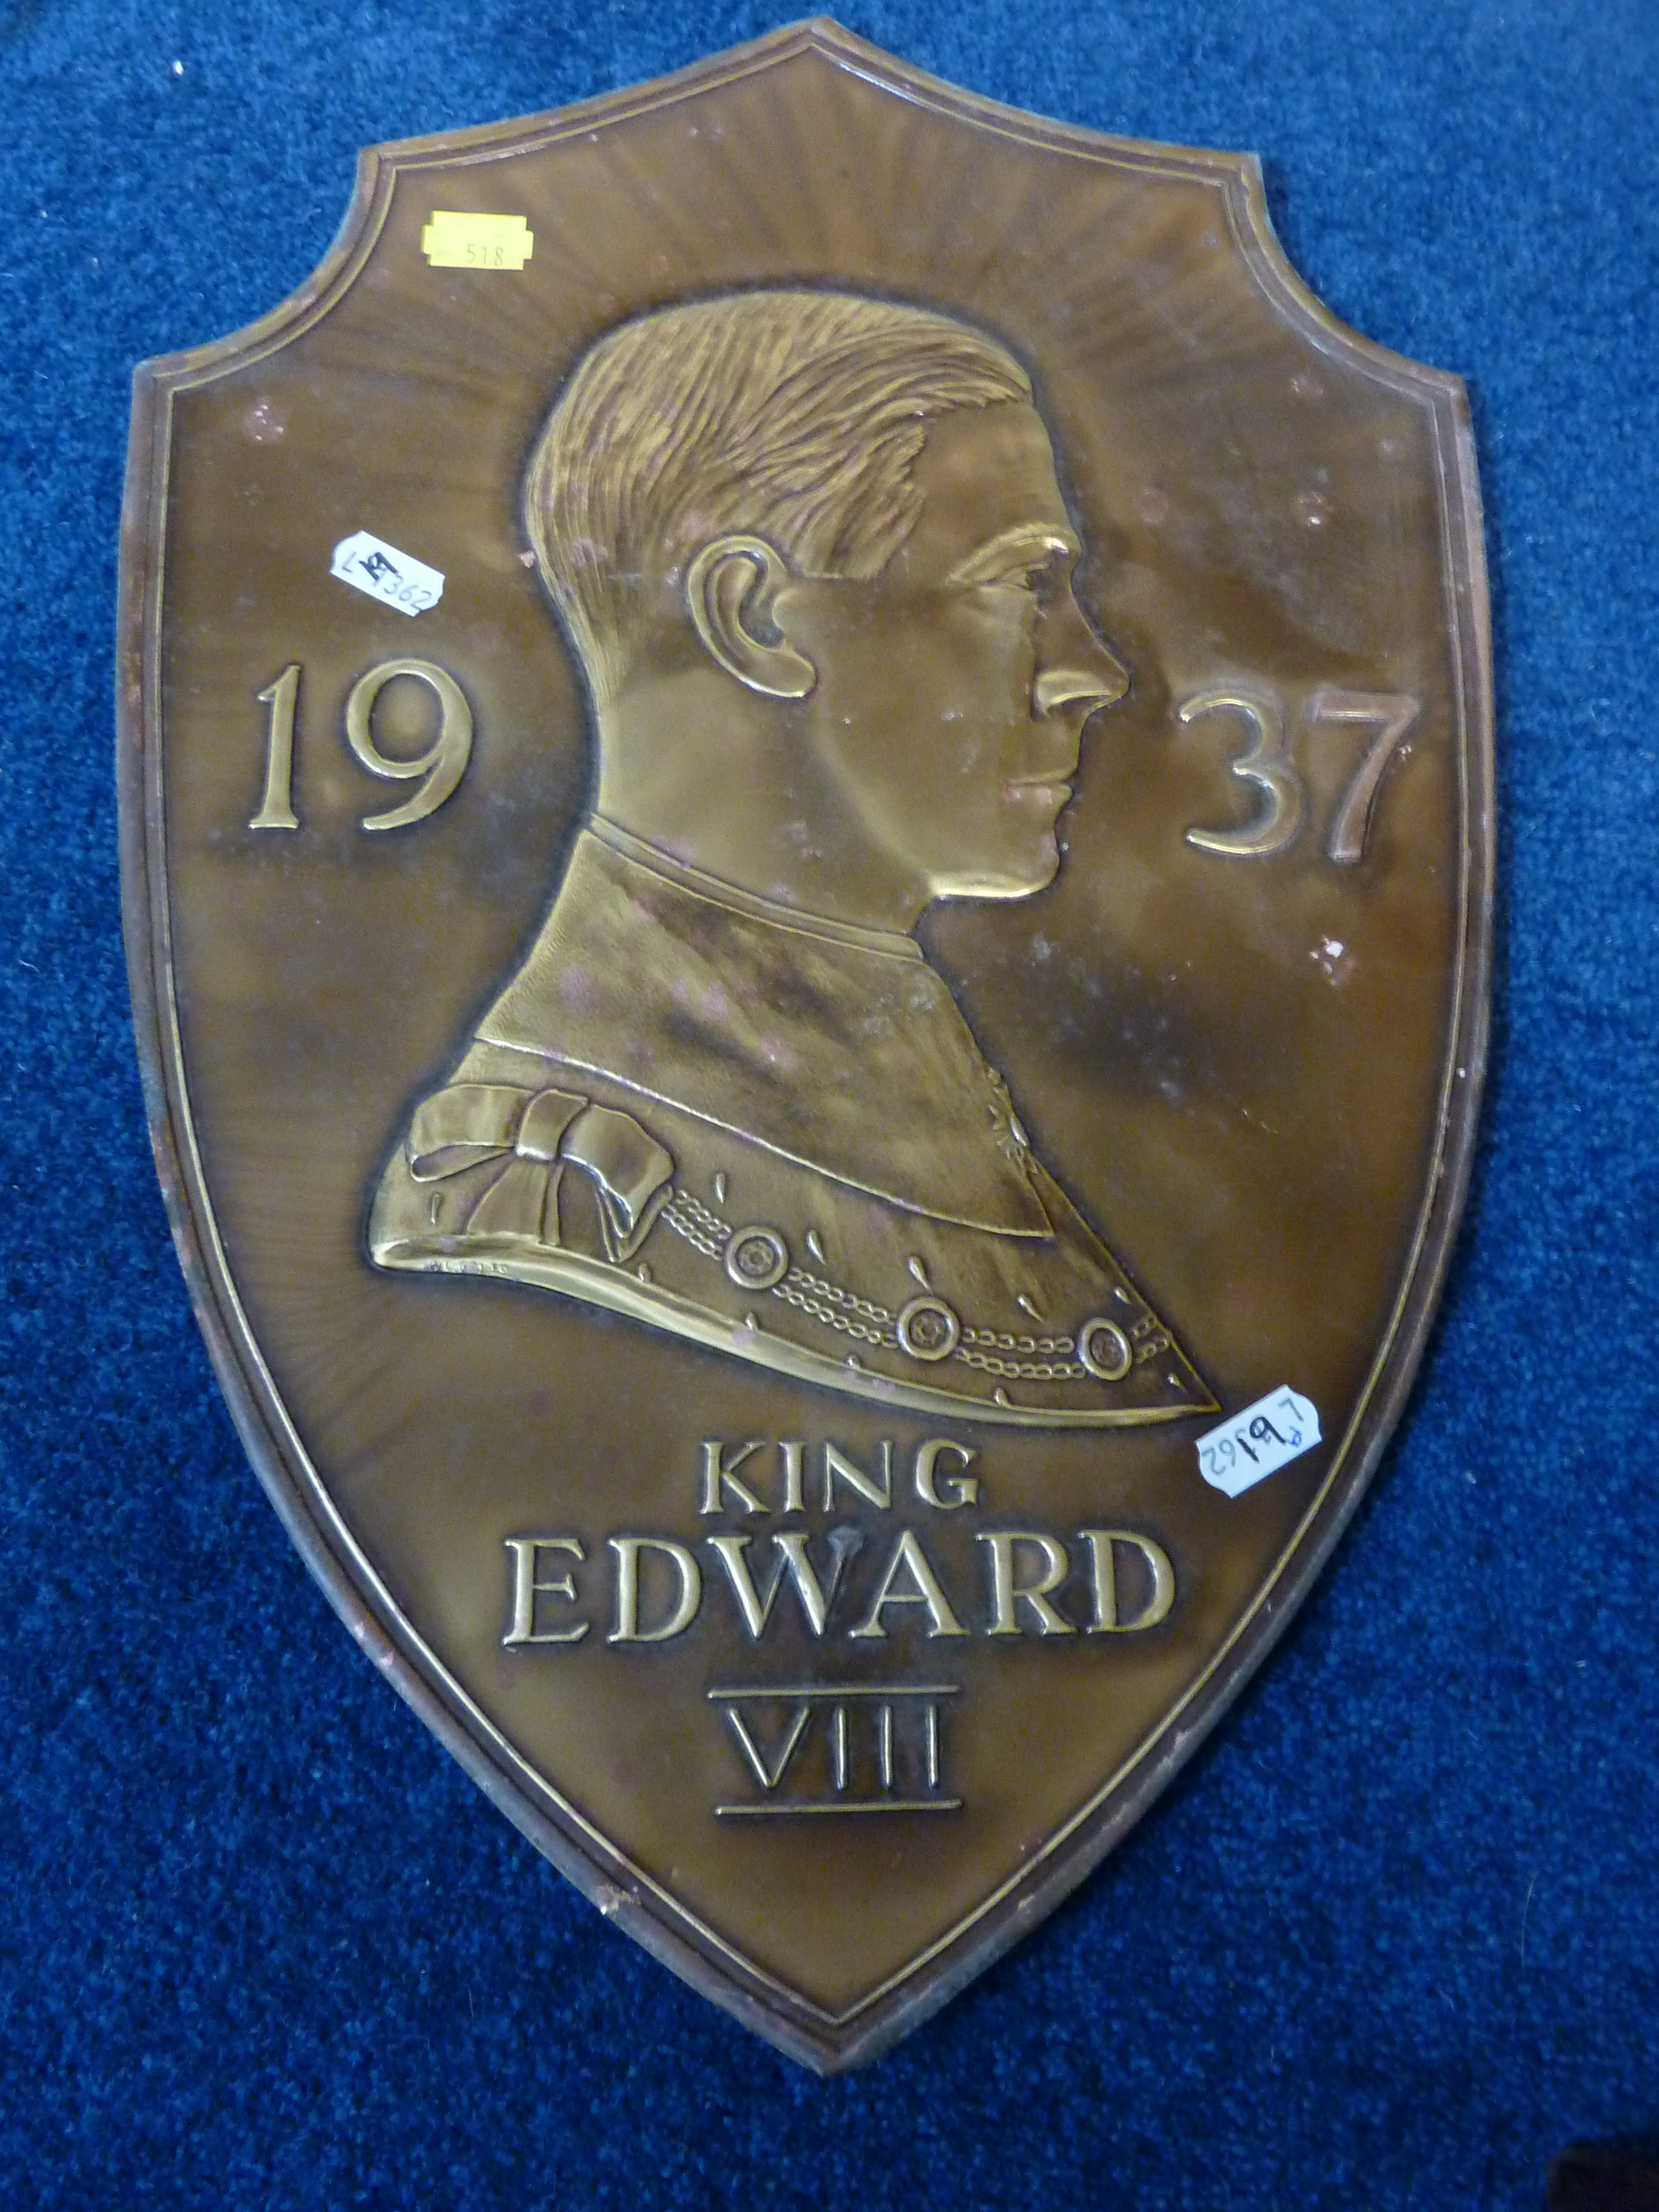 A 1937 ROYAL COMMEMORATIVE PRESSED METAL HERALDIC PLAQUE, King Edward VIII